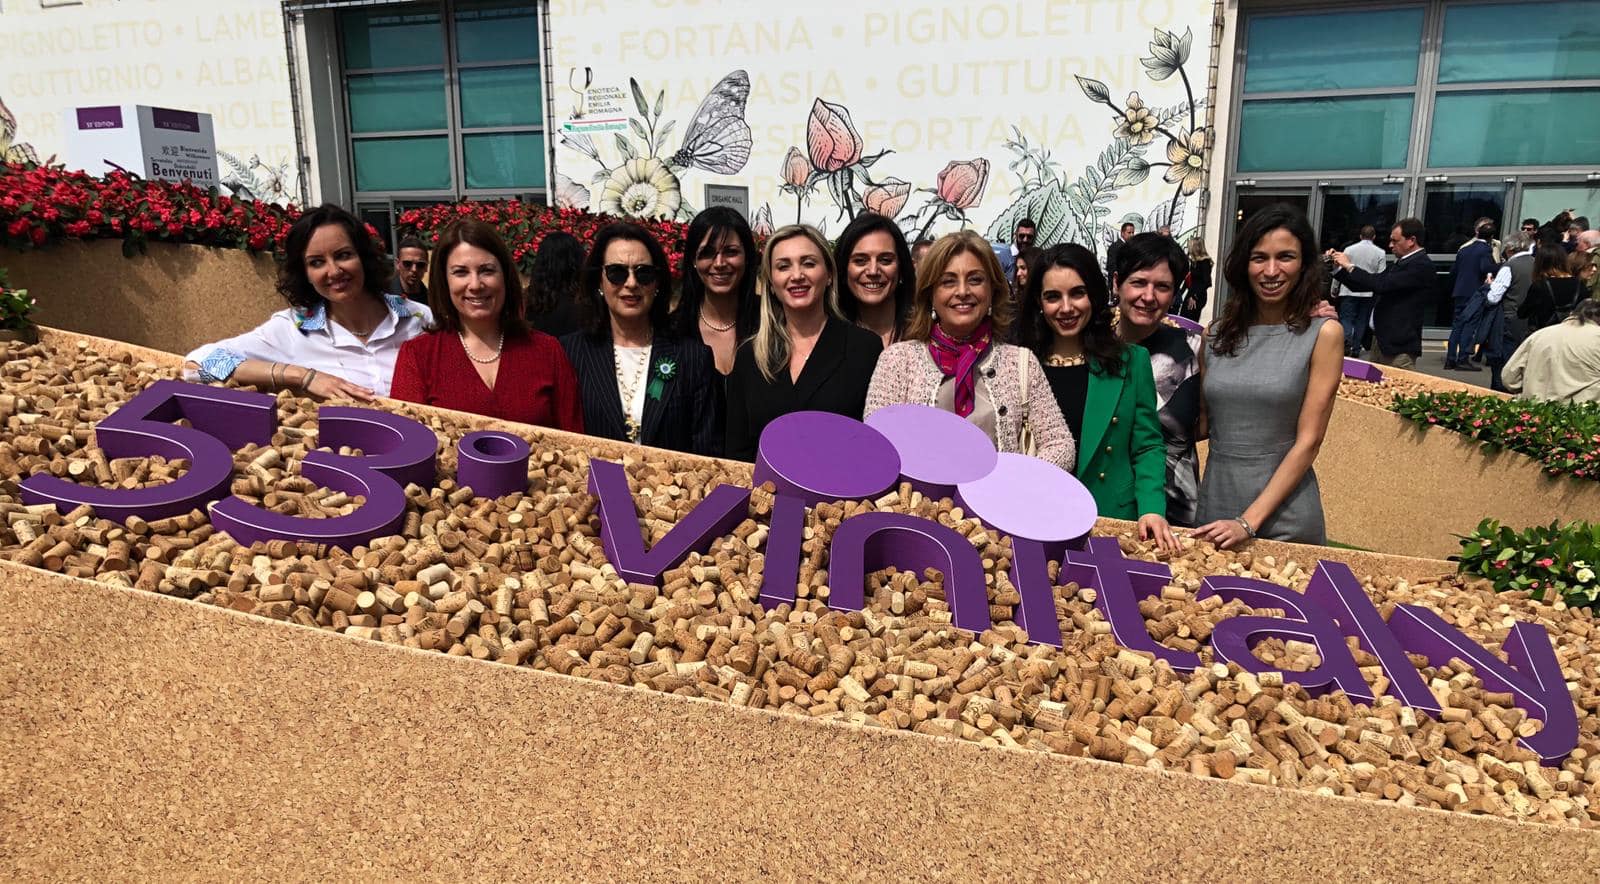 Le Donne del Vino al Vinitaly 2019